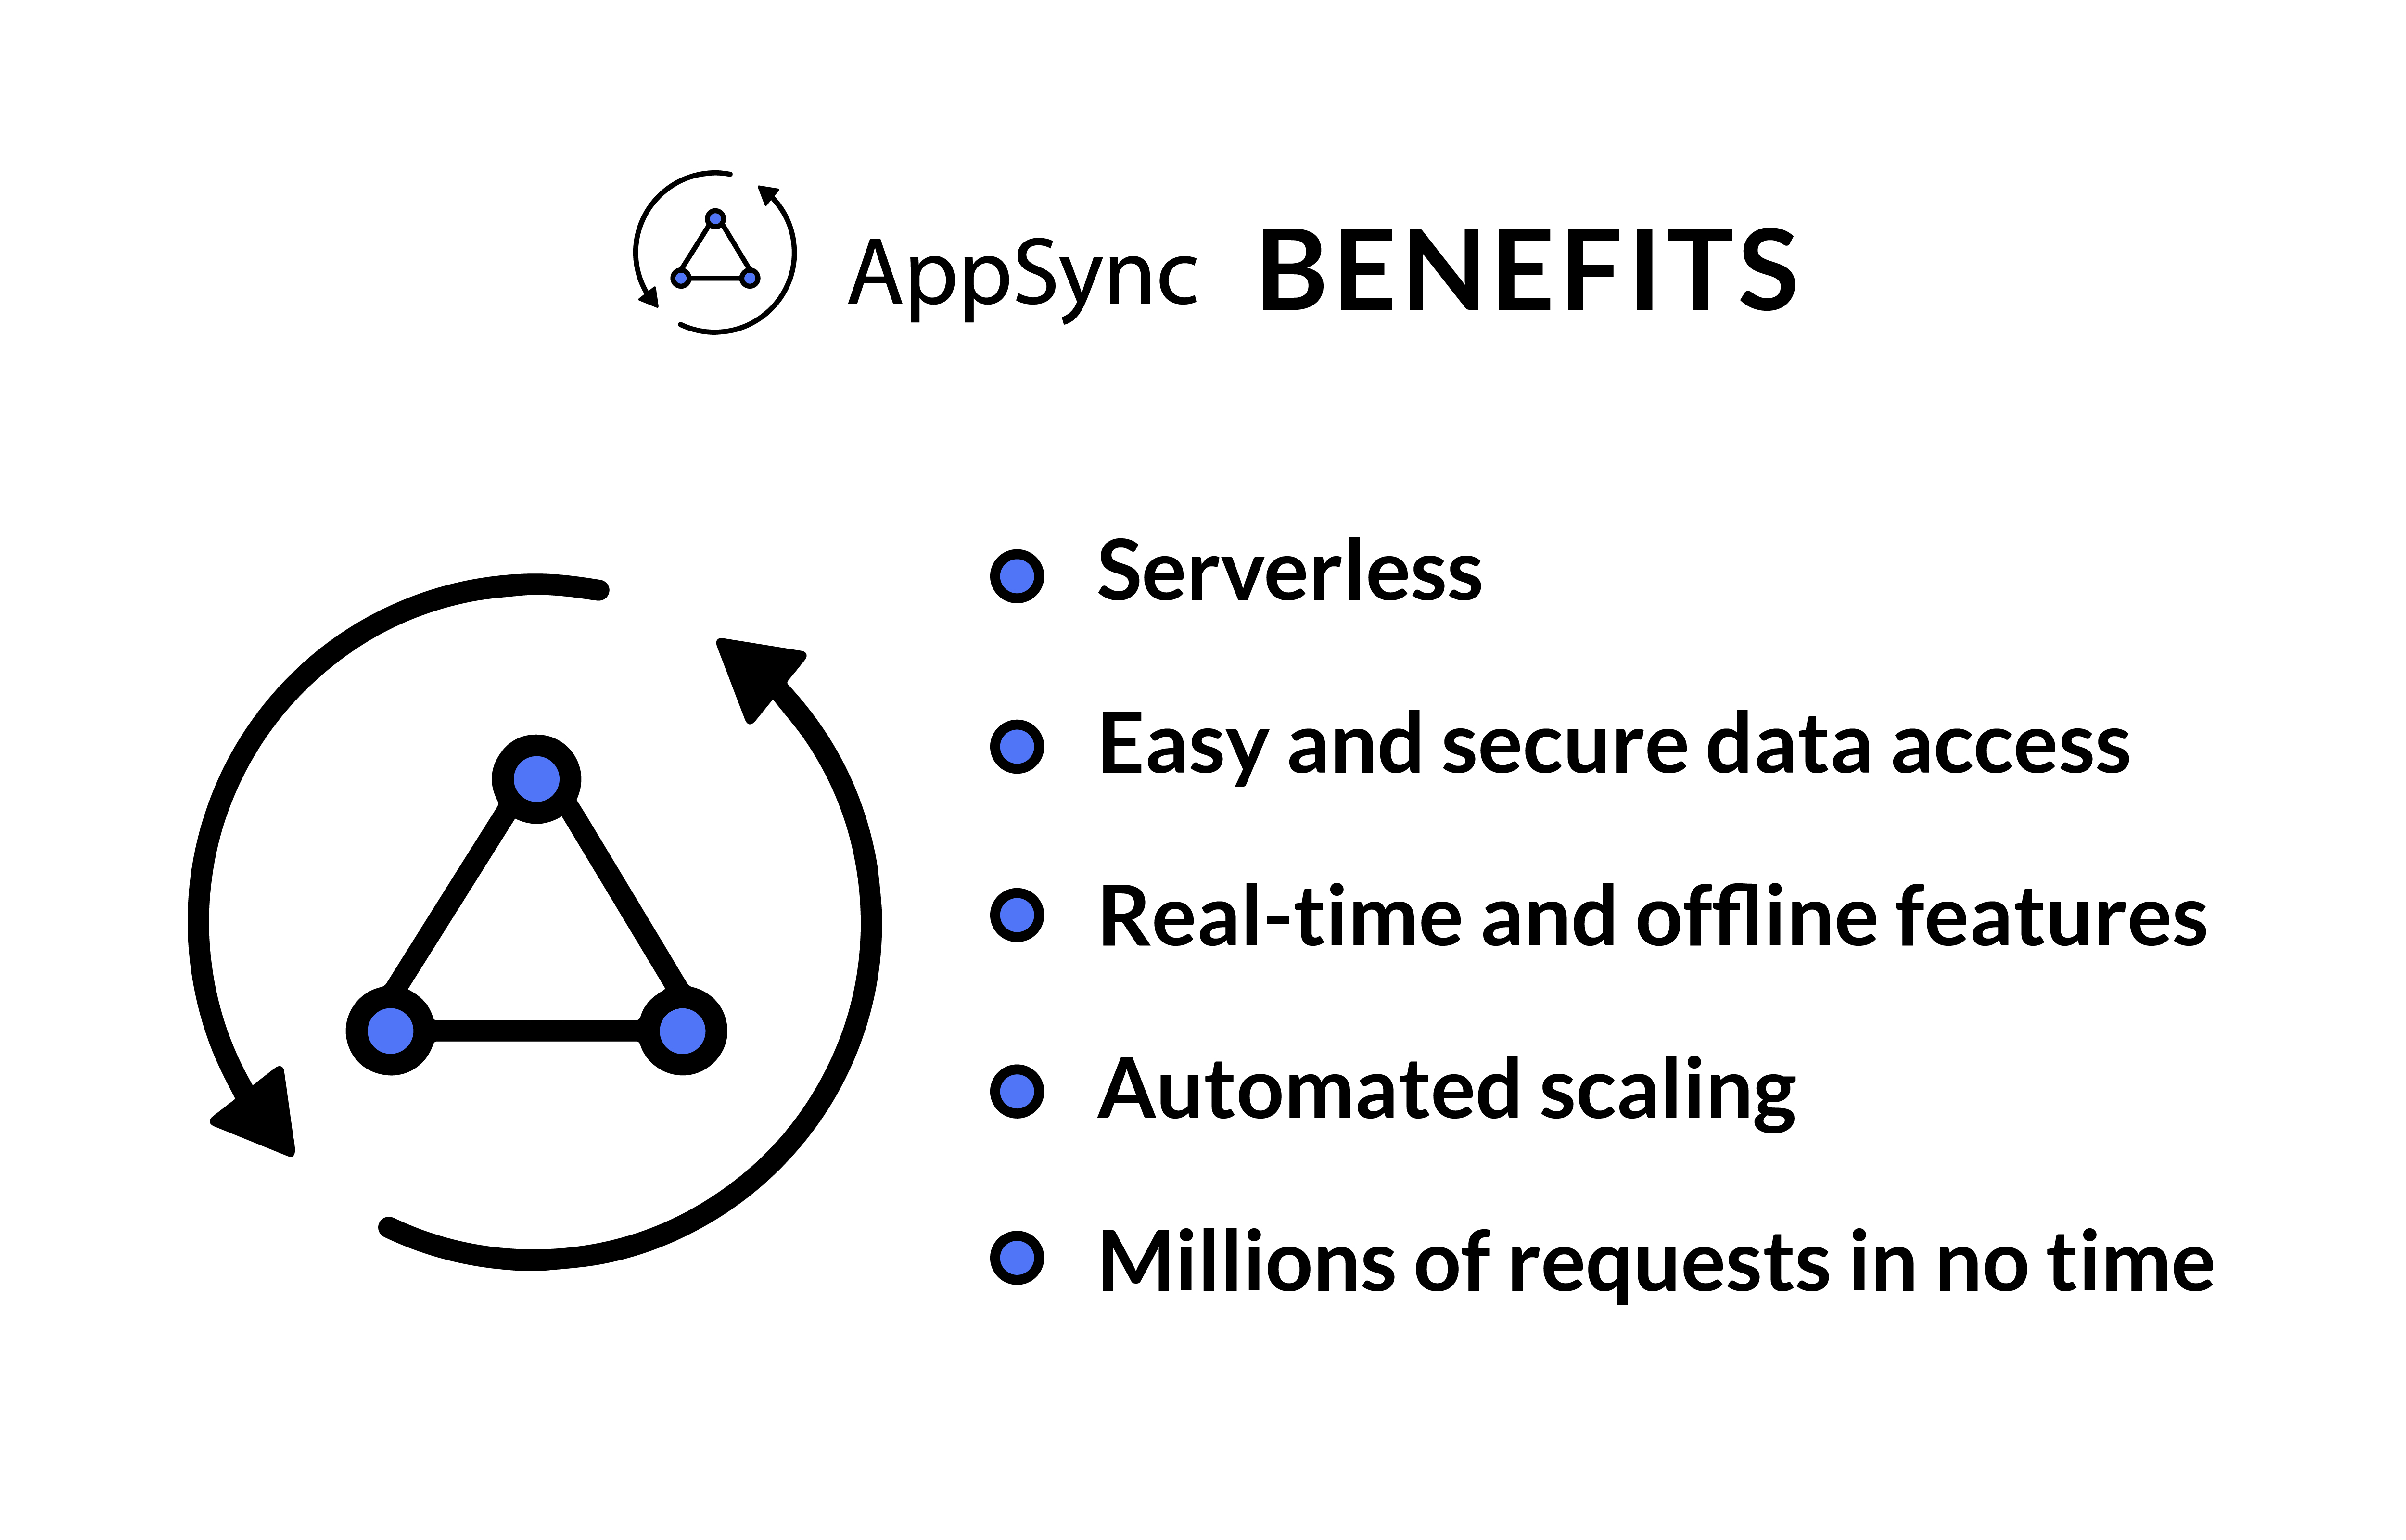 AppSync benefits